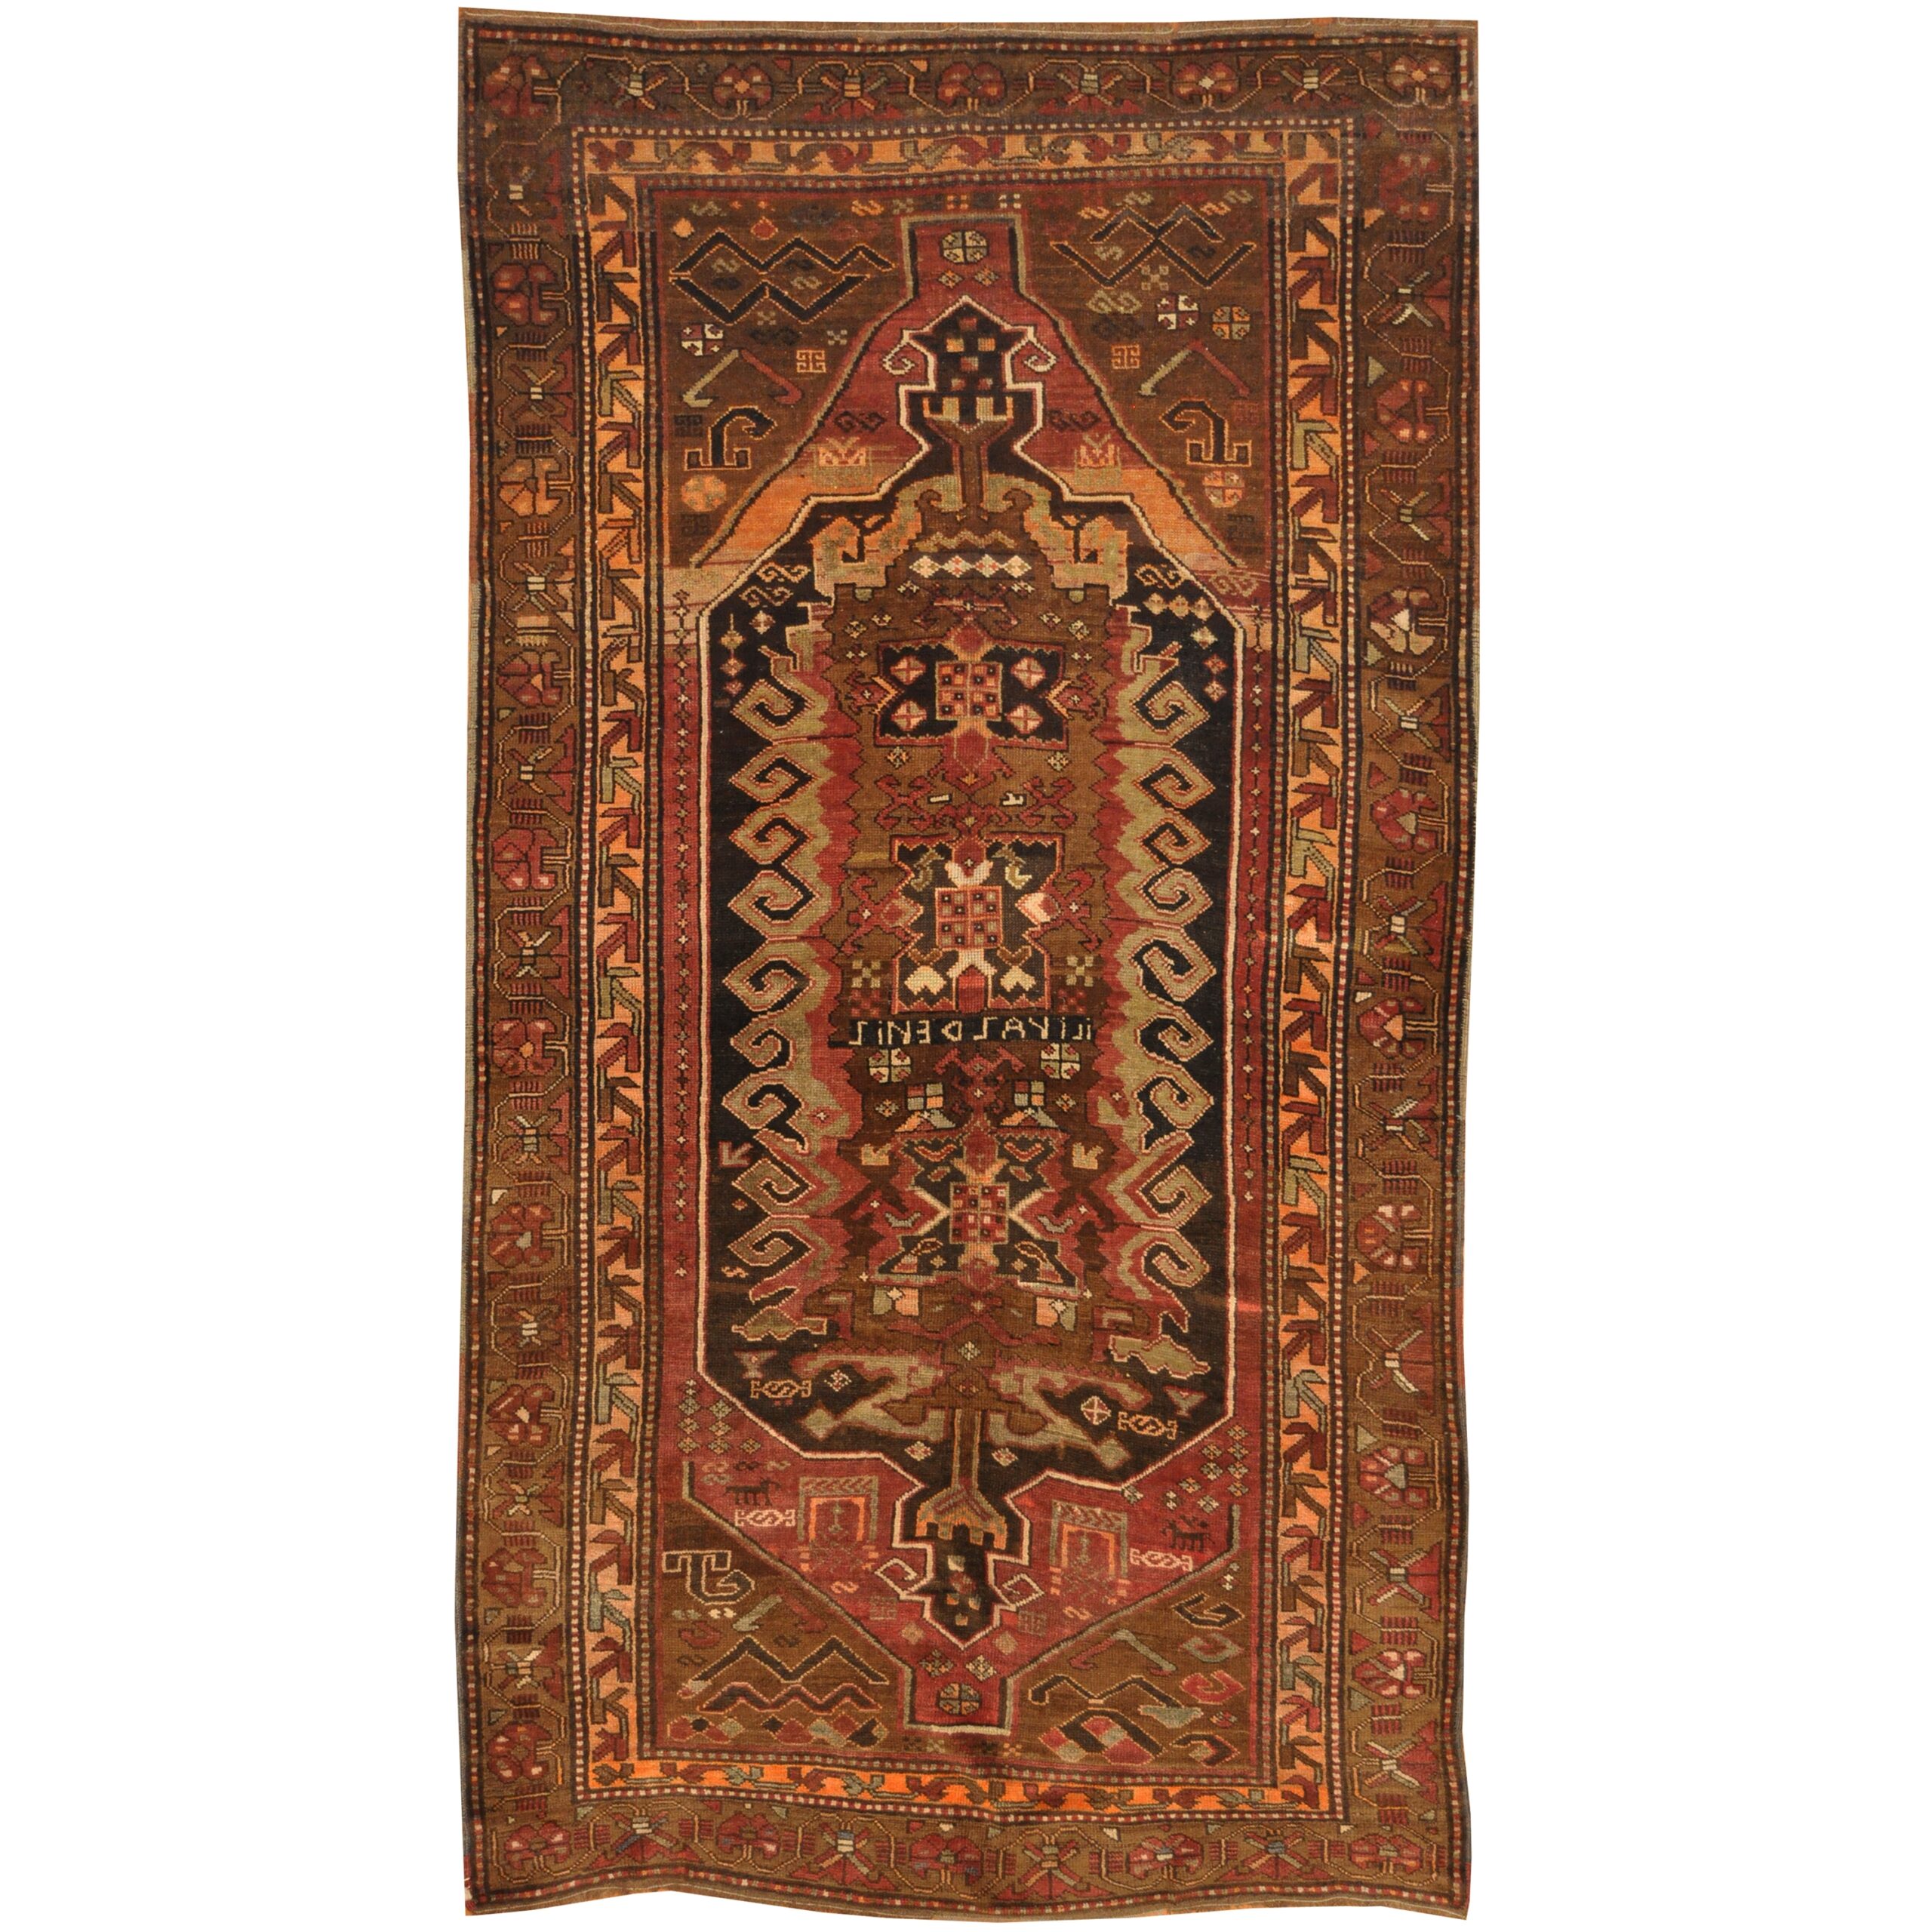 Antique vintage Persian Kurdish handmade hand-knotted rug 40" x 76" wool  #114 